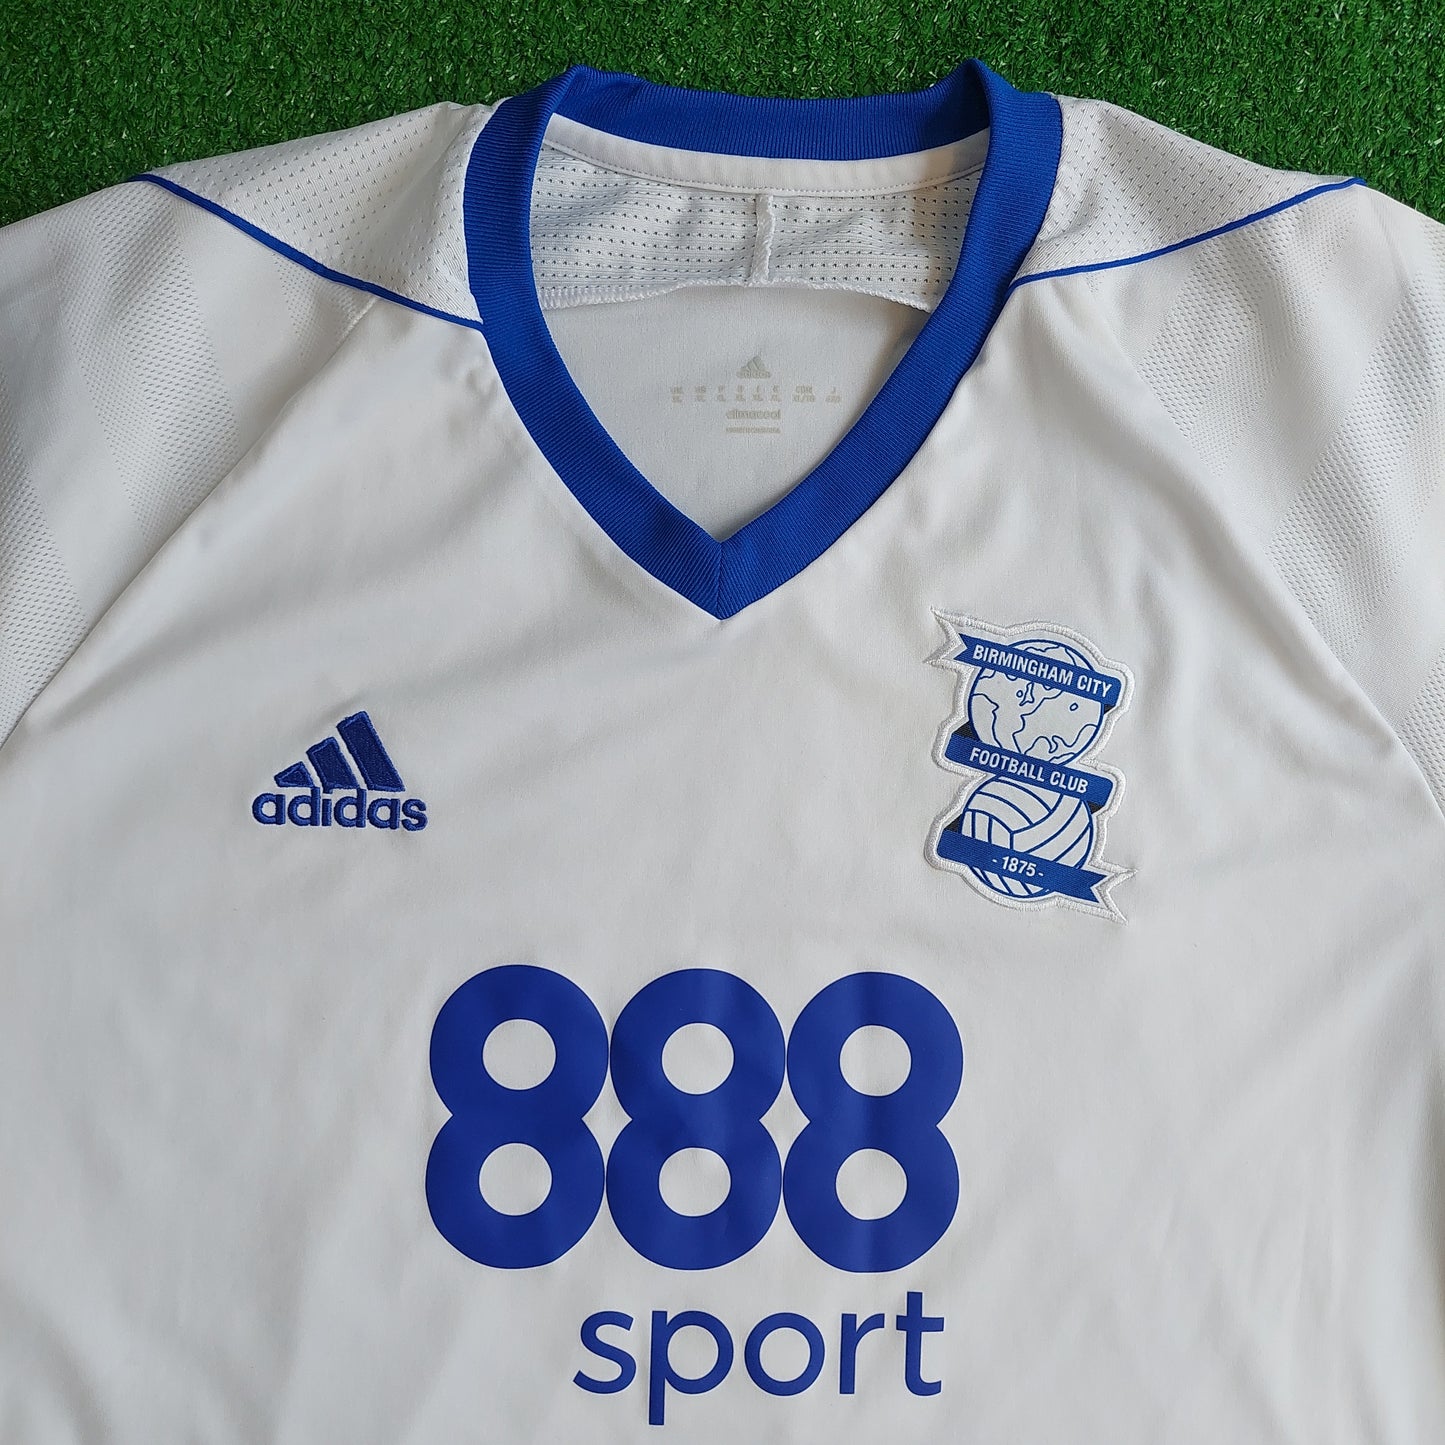 Birmingham City 2017/18 Away Shirt (Very good) - Size XL